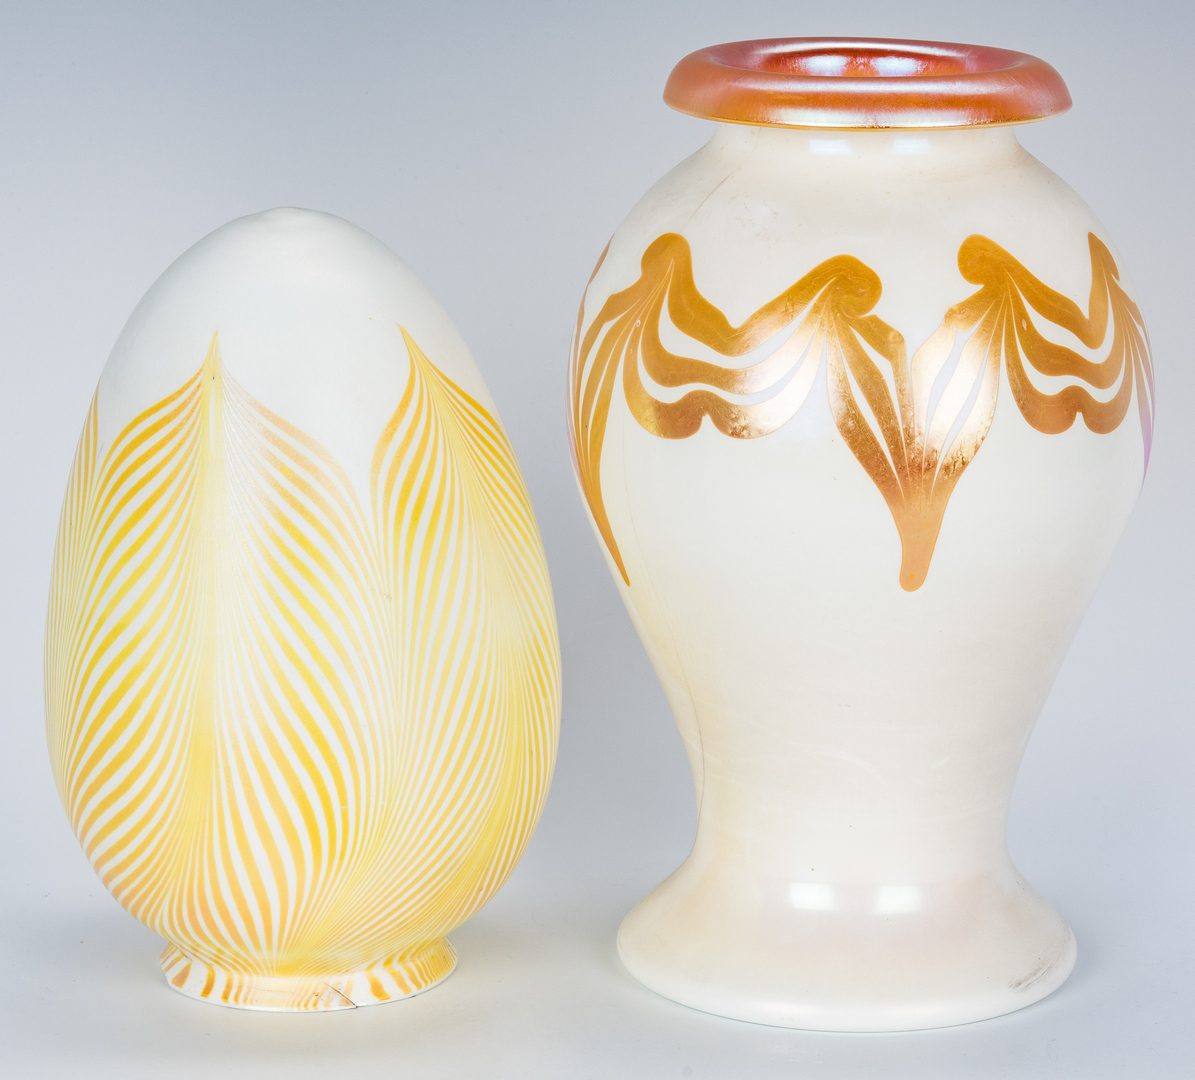 Lot 504: 2 pcs. Durand Art Glass, 2 Moorish Crackle Vases